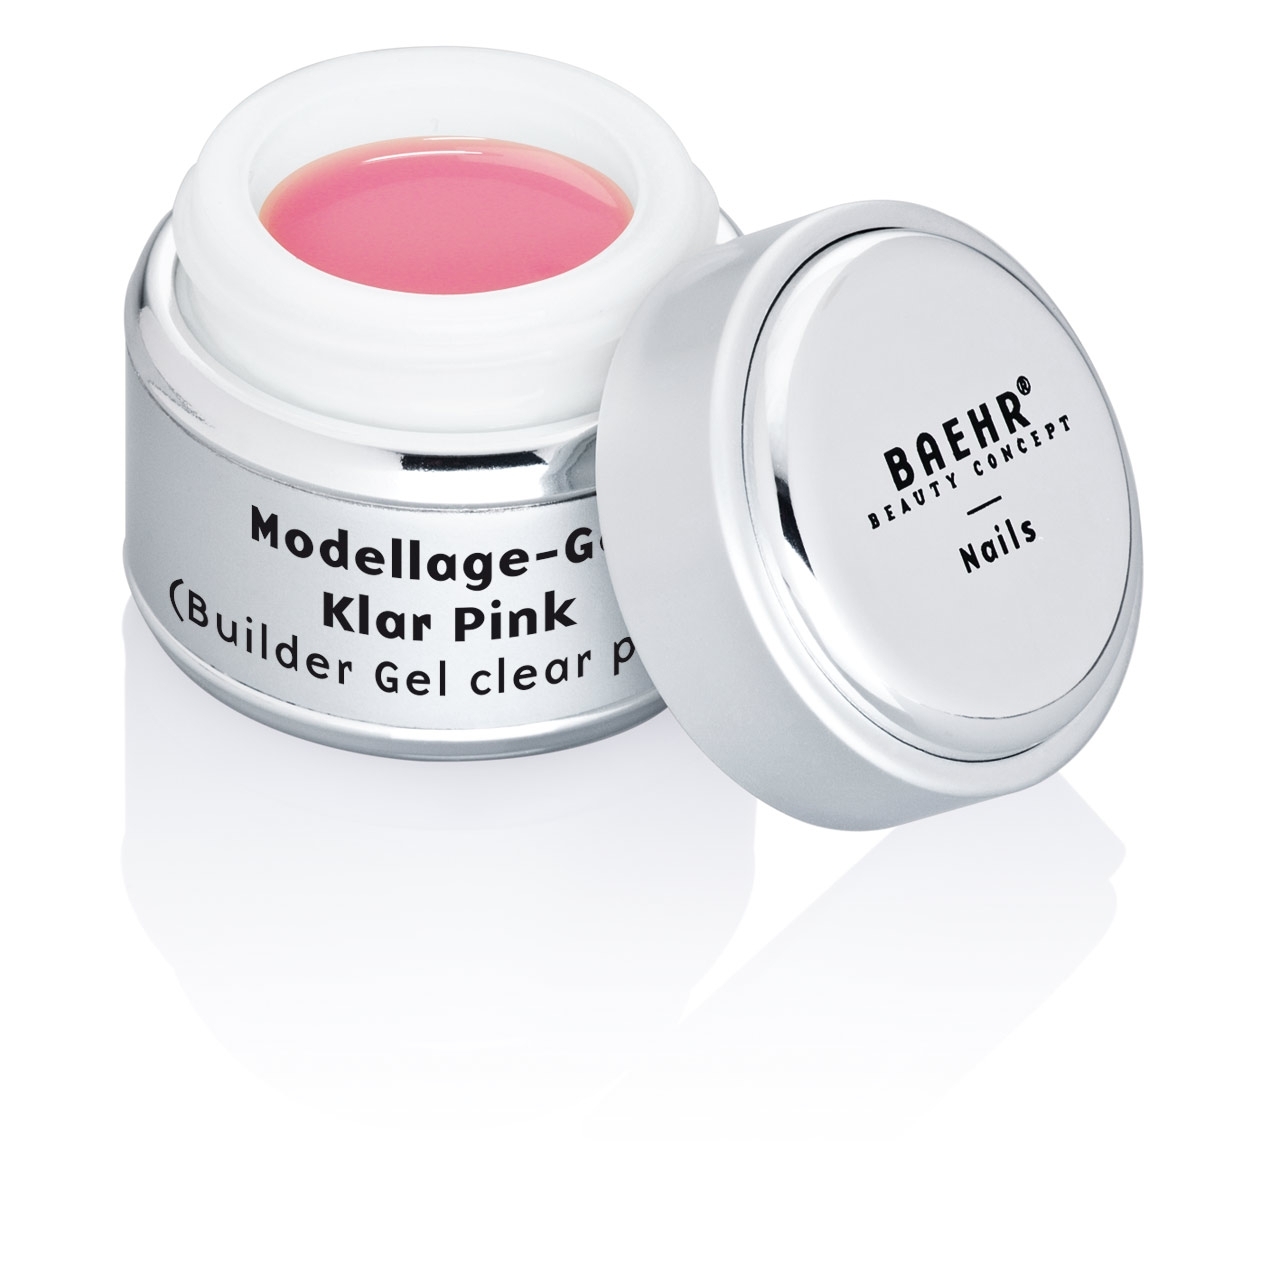 BAEHR BEAUTY CONCEPT - NAILS Modellage-Gel Klar Pink 15 ml